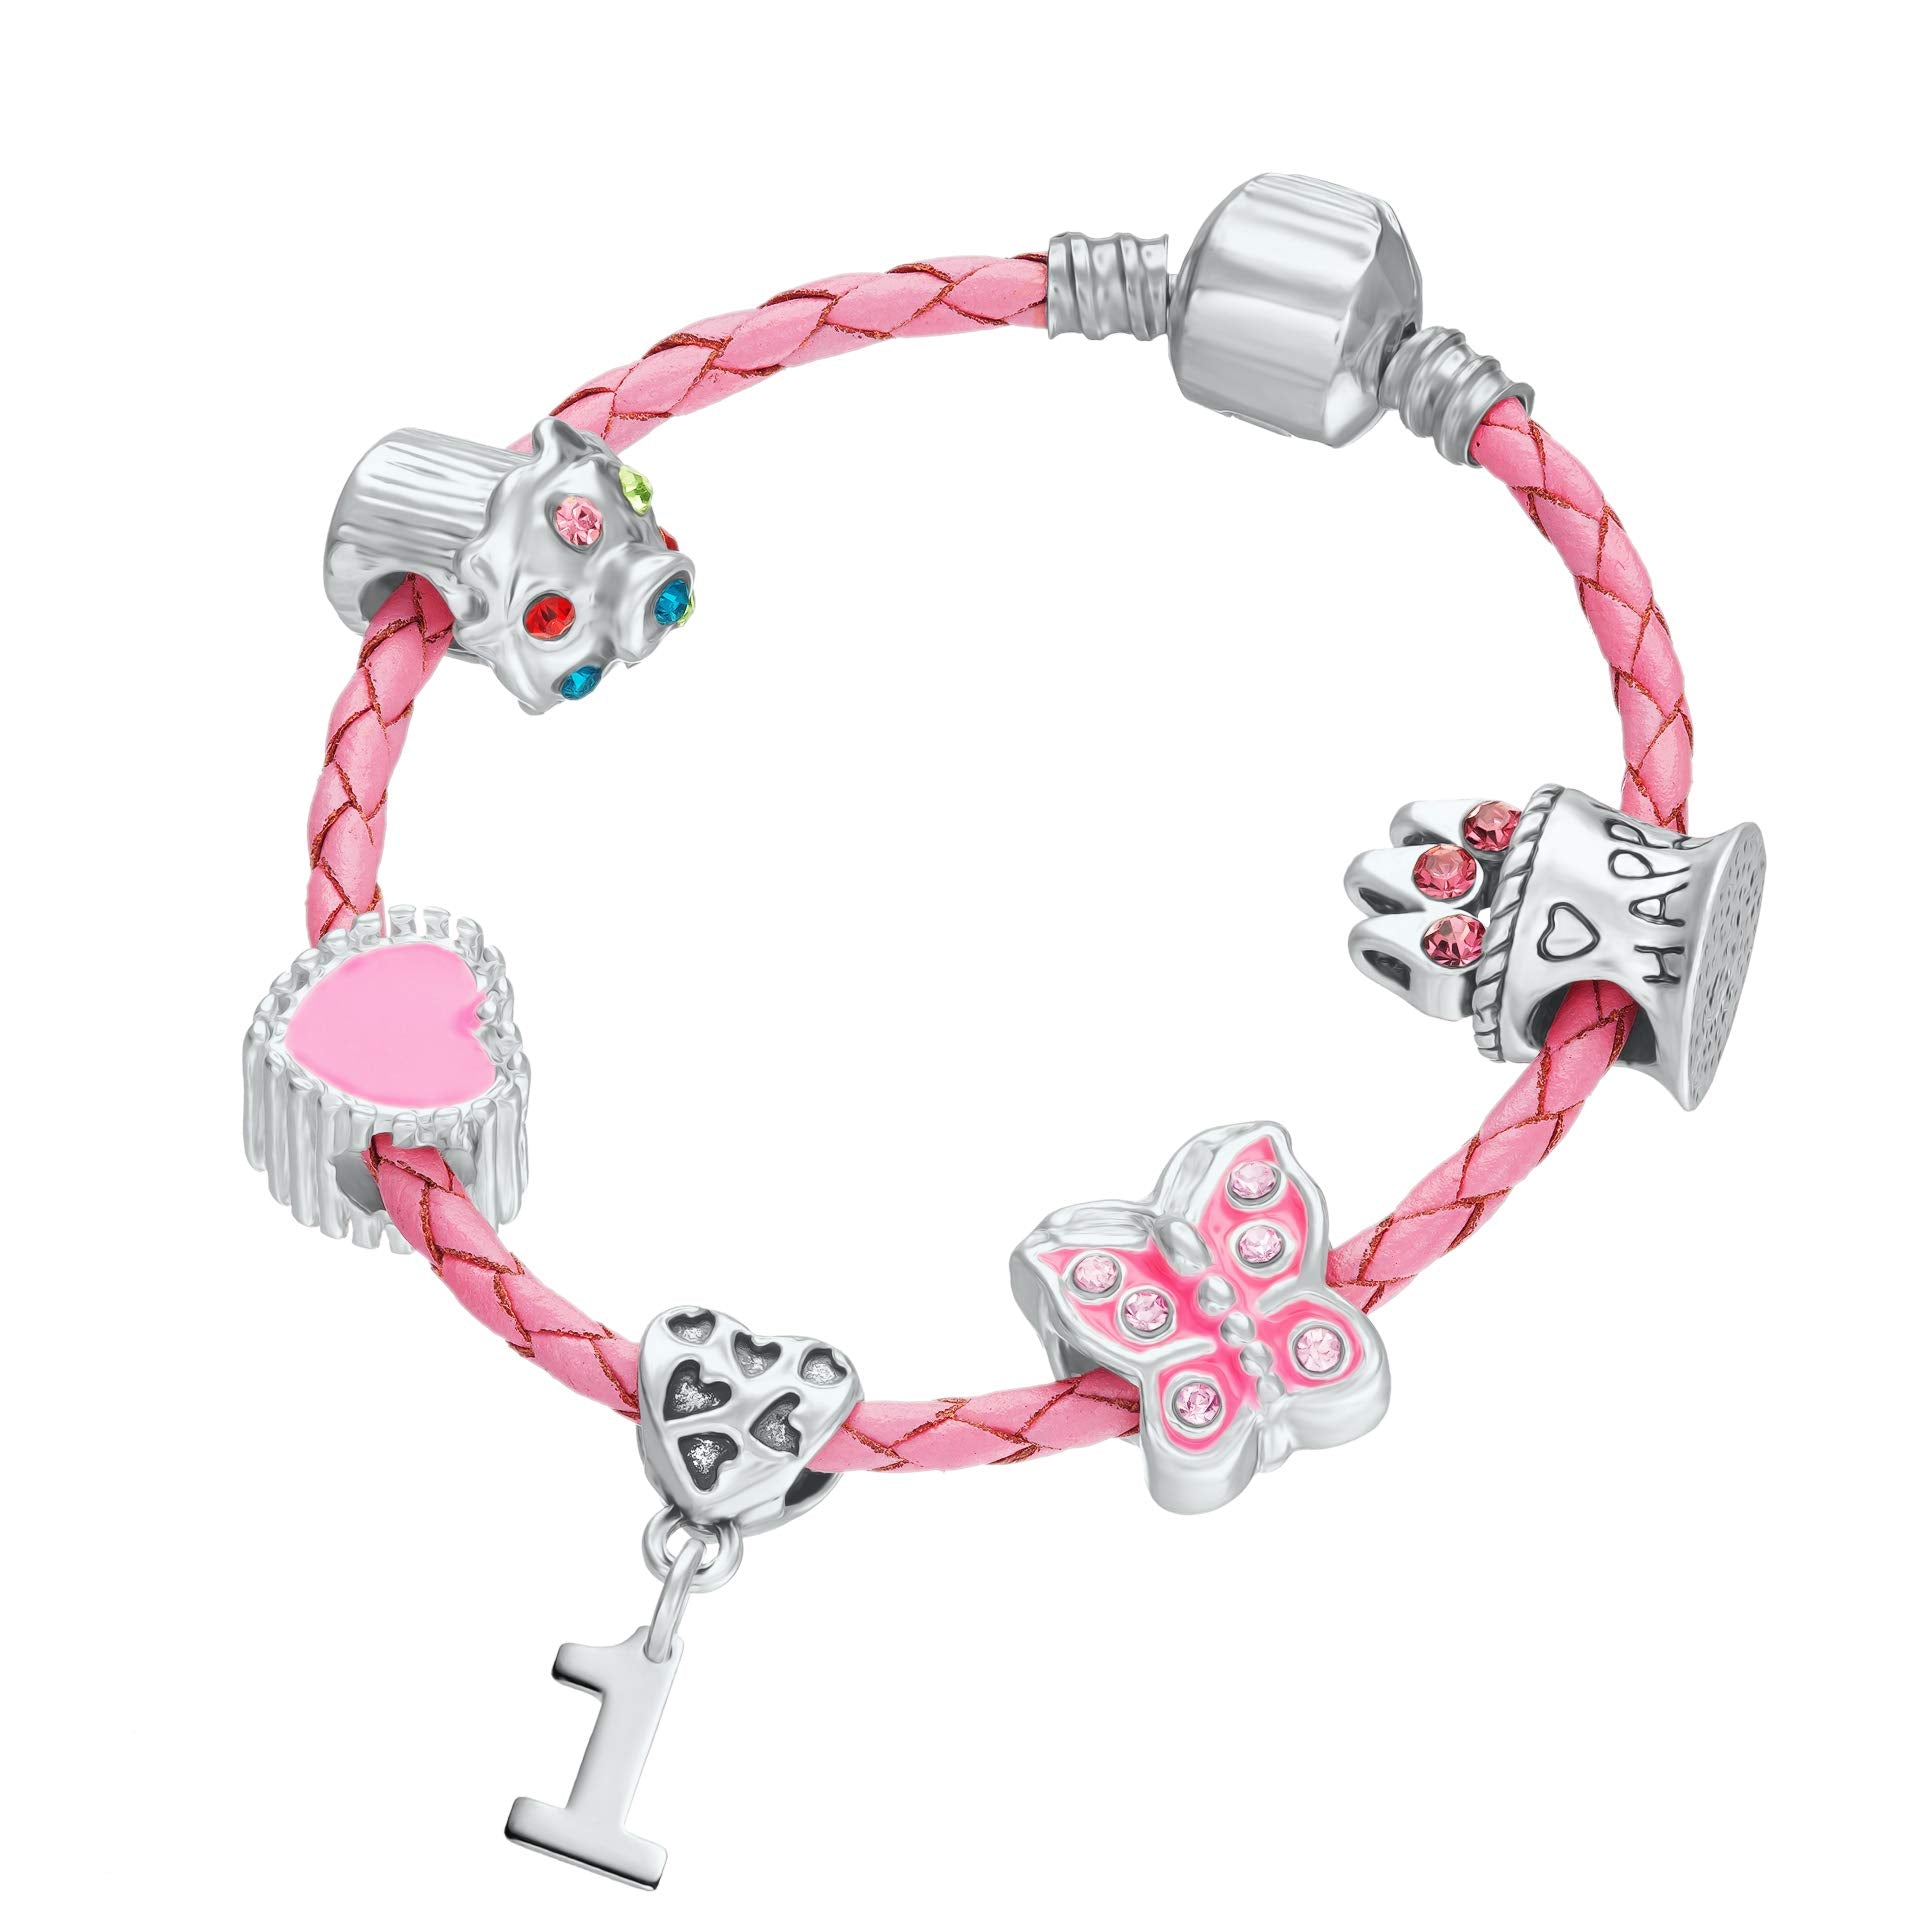 Children's Pink Leather Happy 1st Birthday Charm Bracelet with Gift Box - Girl's & Children's Birthday Gift Jewellery